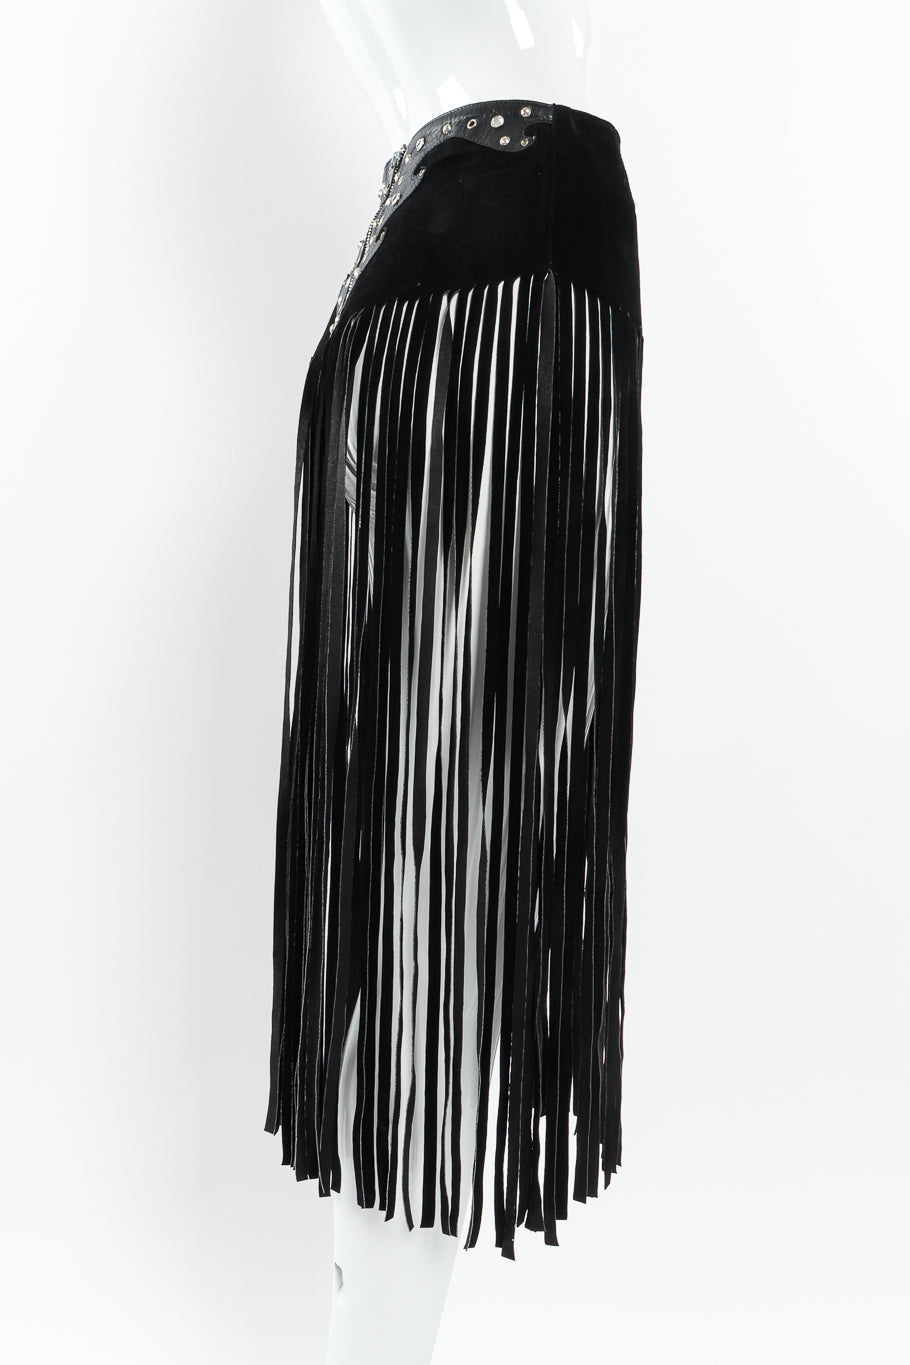 leather fringe belt skirt by Free Art Studio on mannequin side @recessla